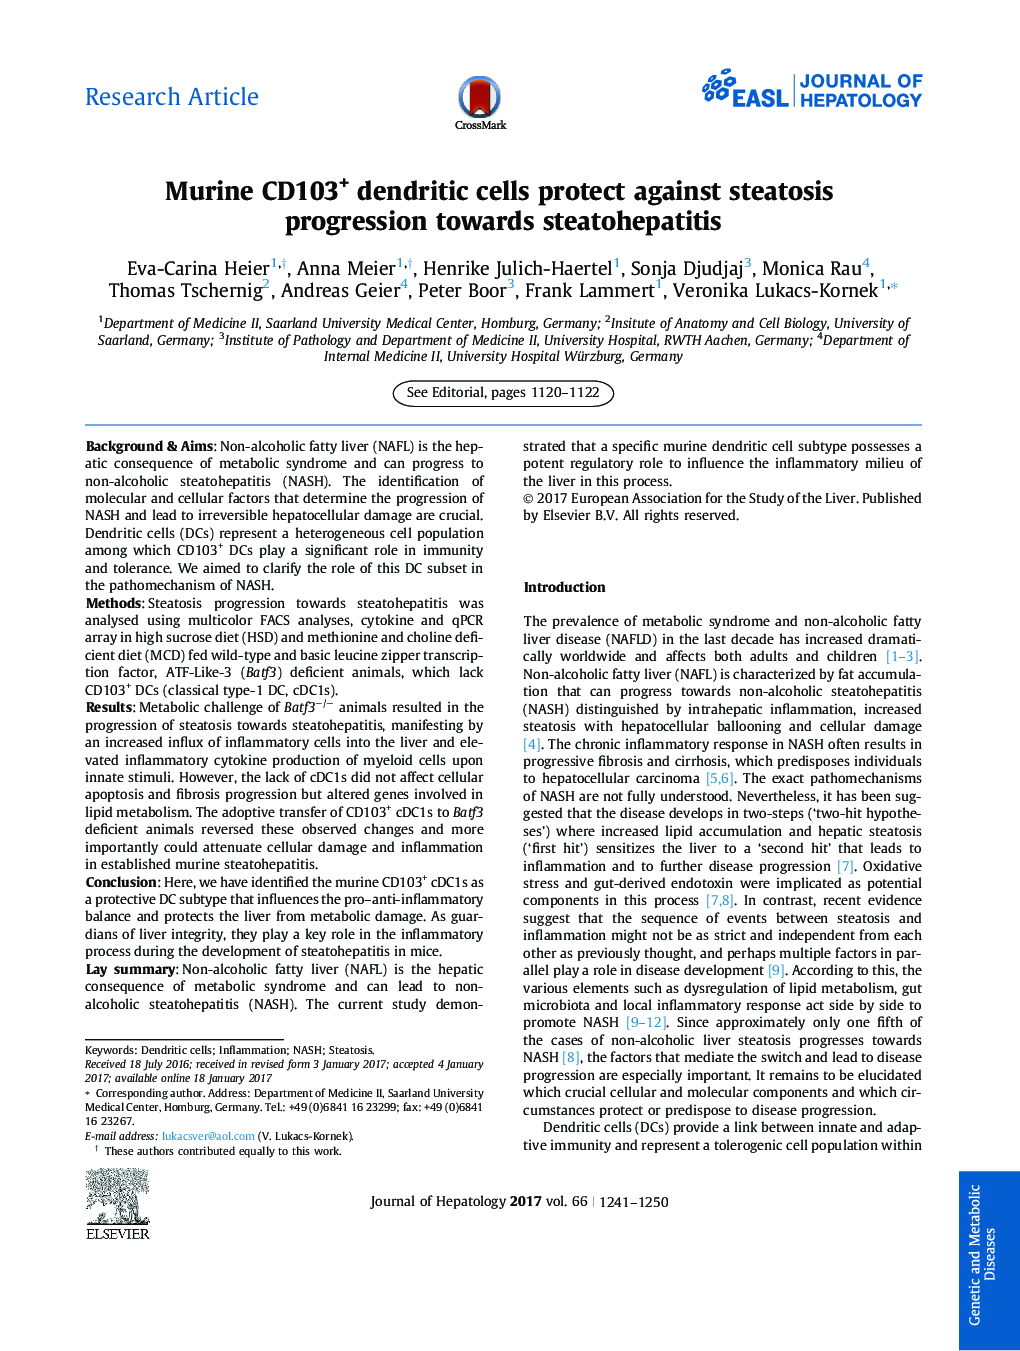 Murine CD103+ dendritic cells protect against steatosis progression towards steatohepatitis